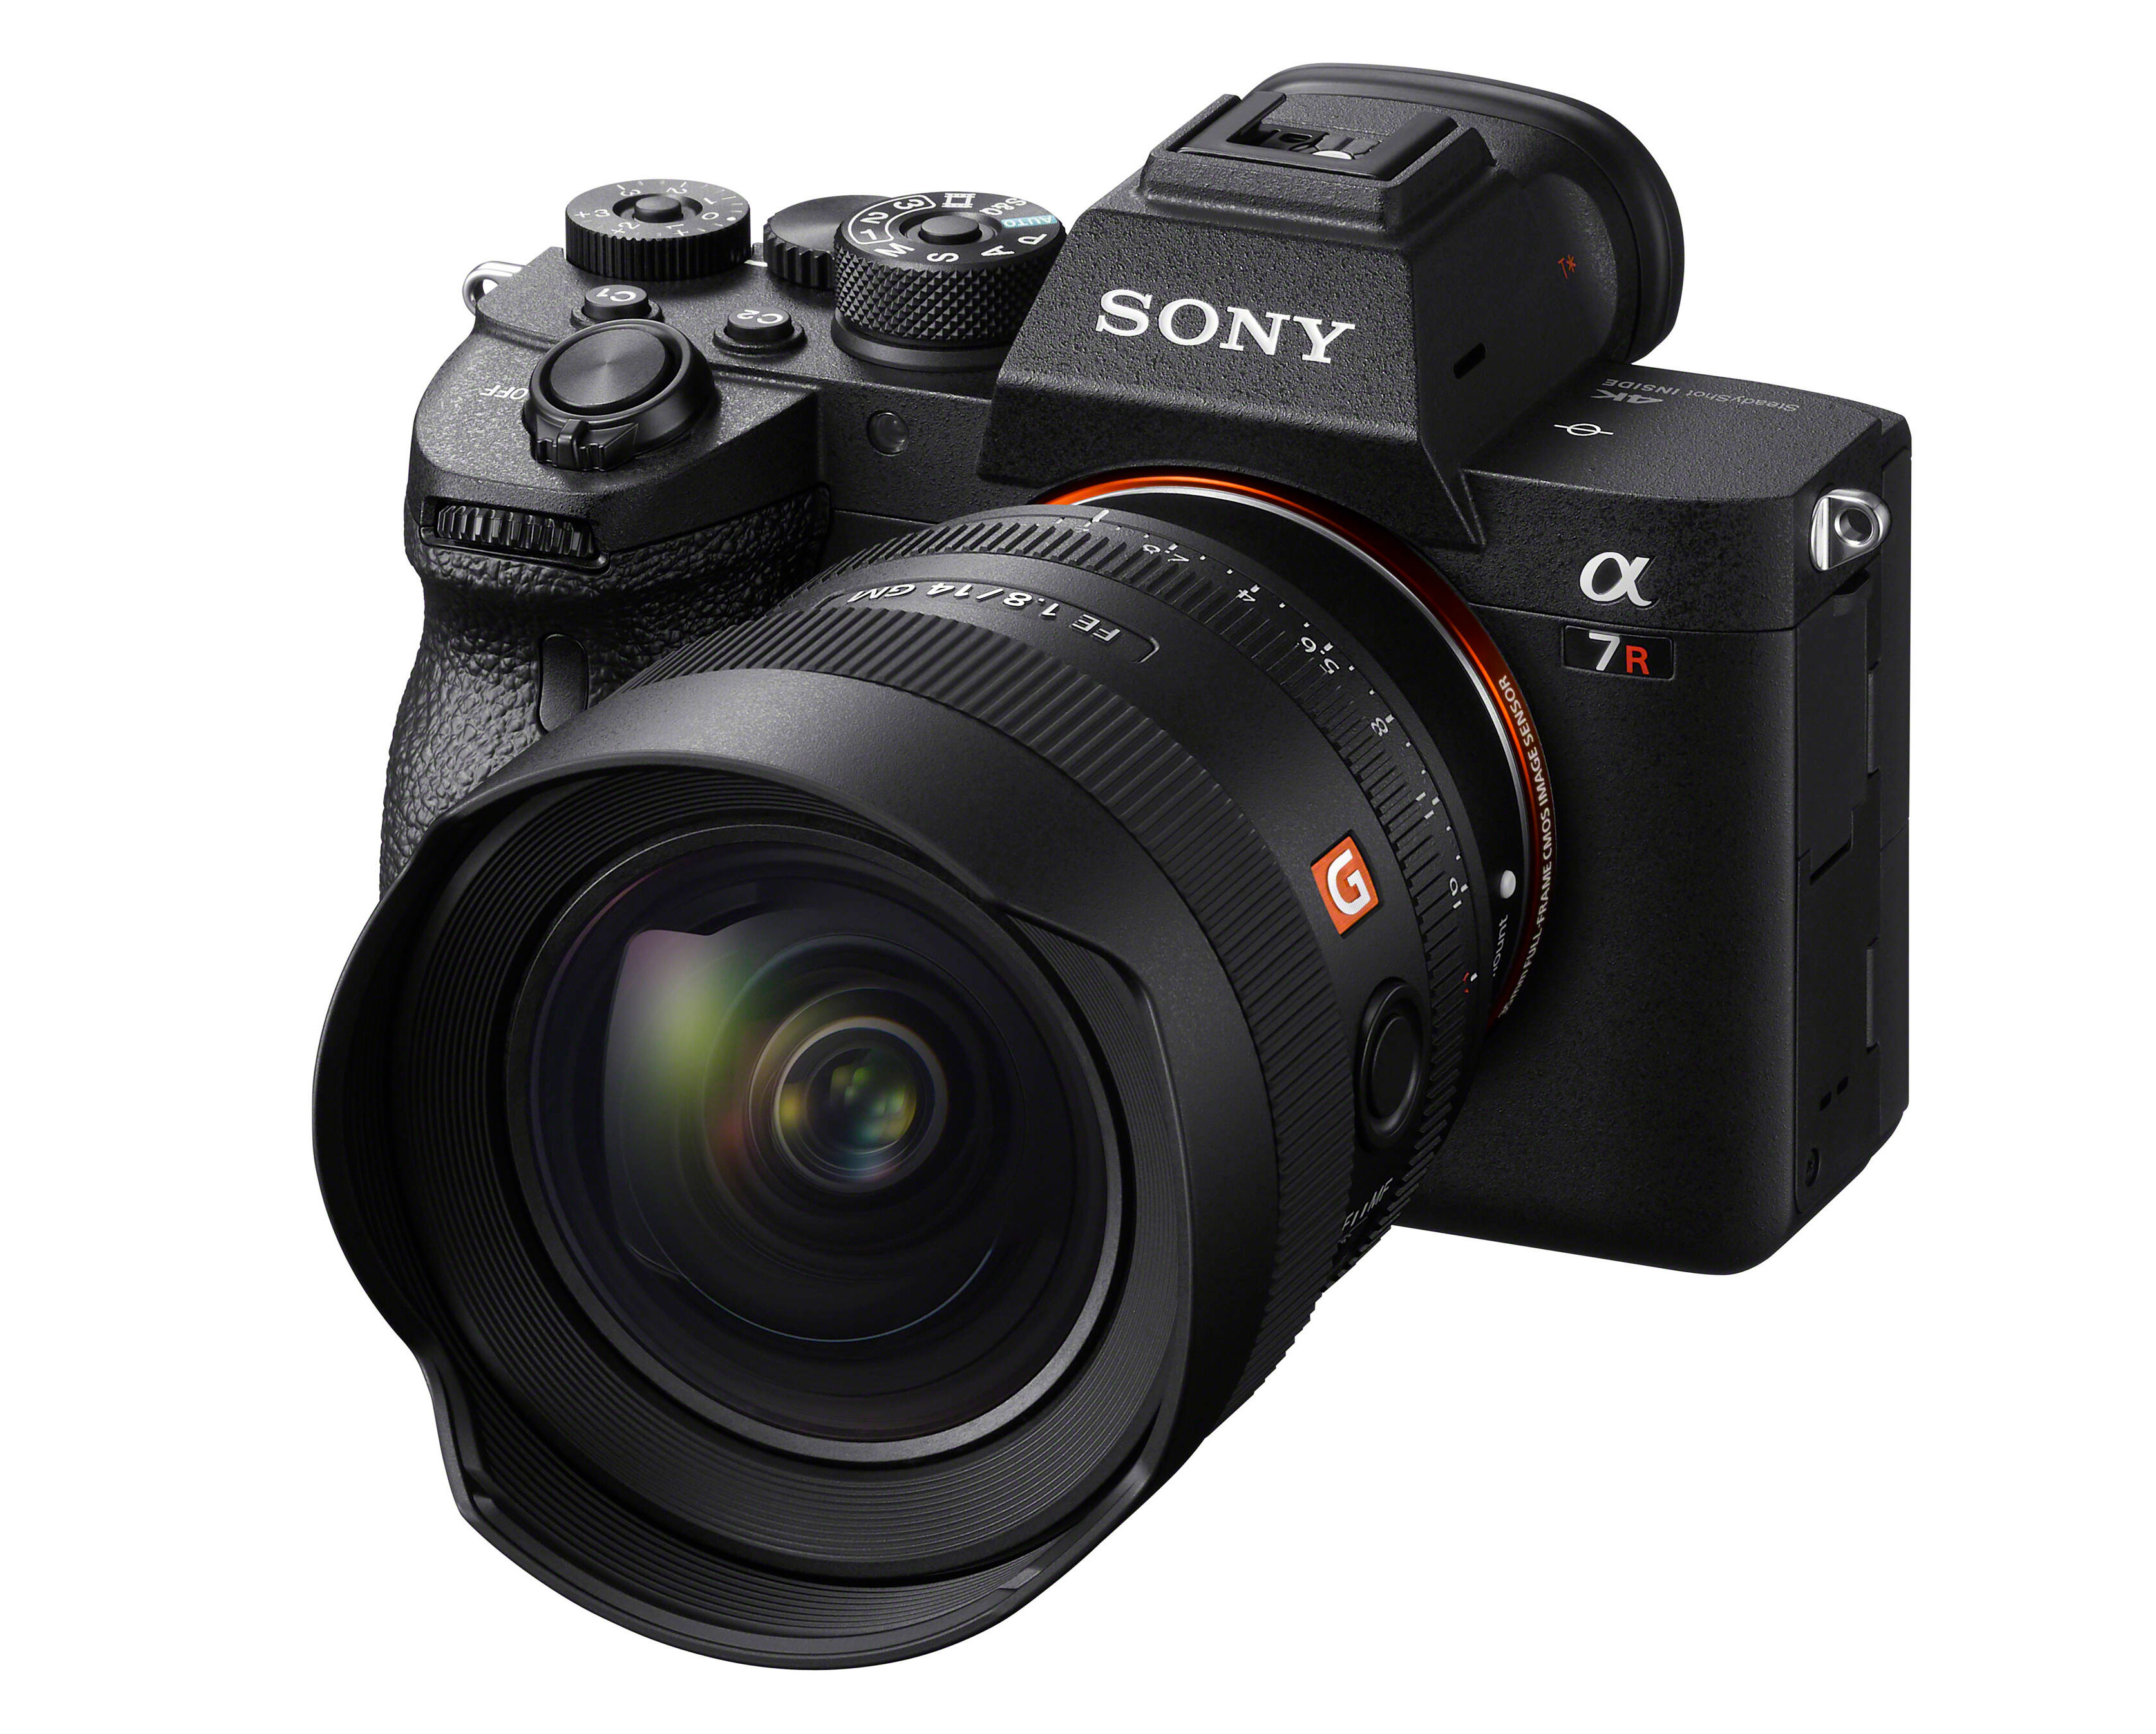 Sony FE 14mm f/1.8 GM